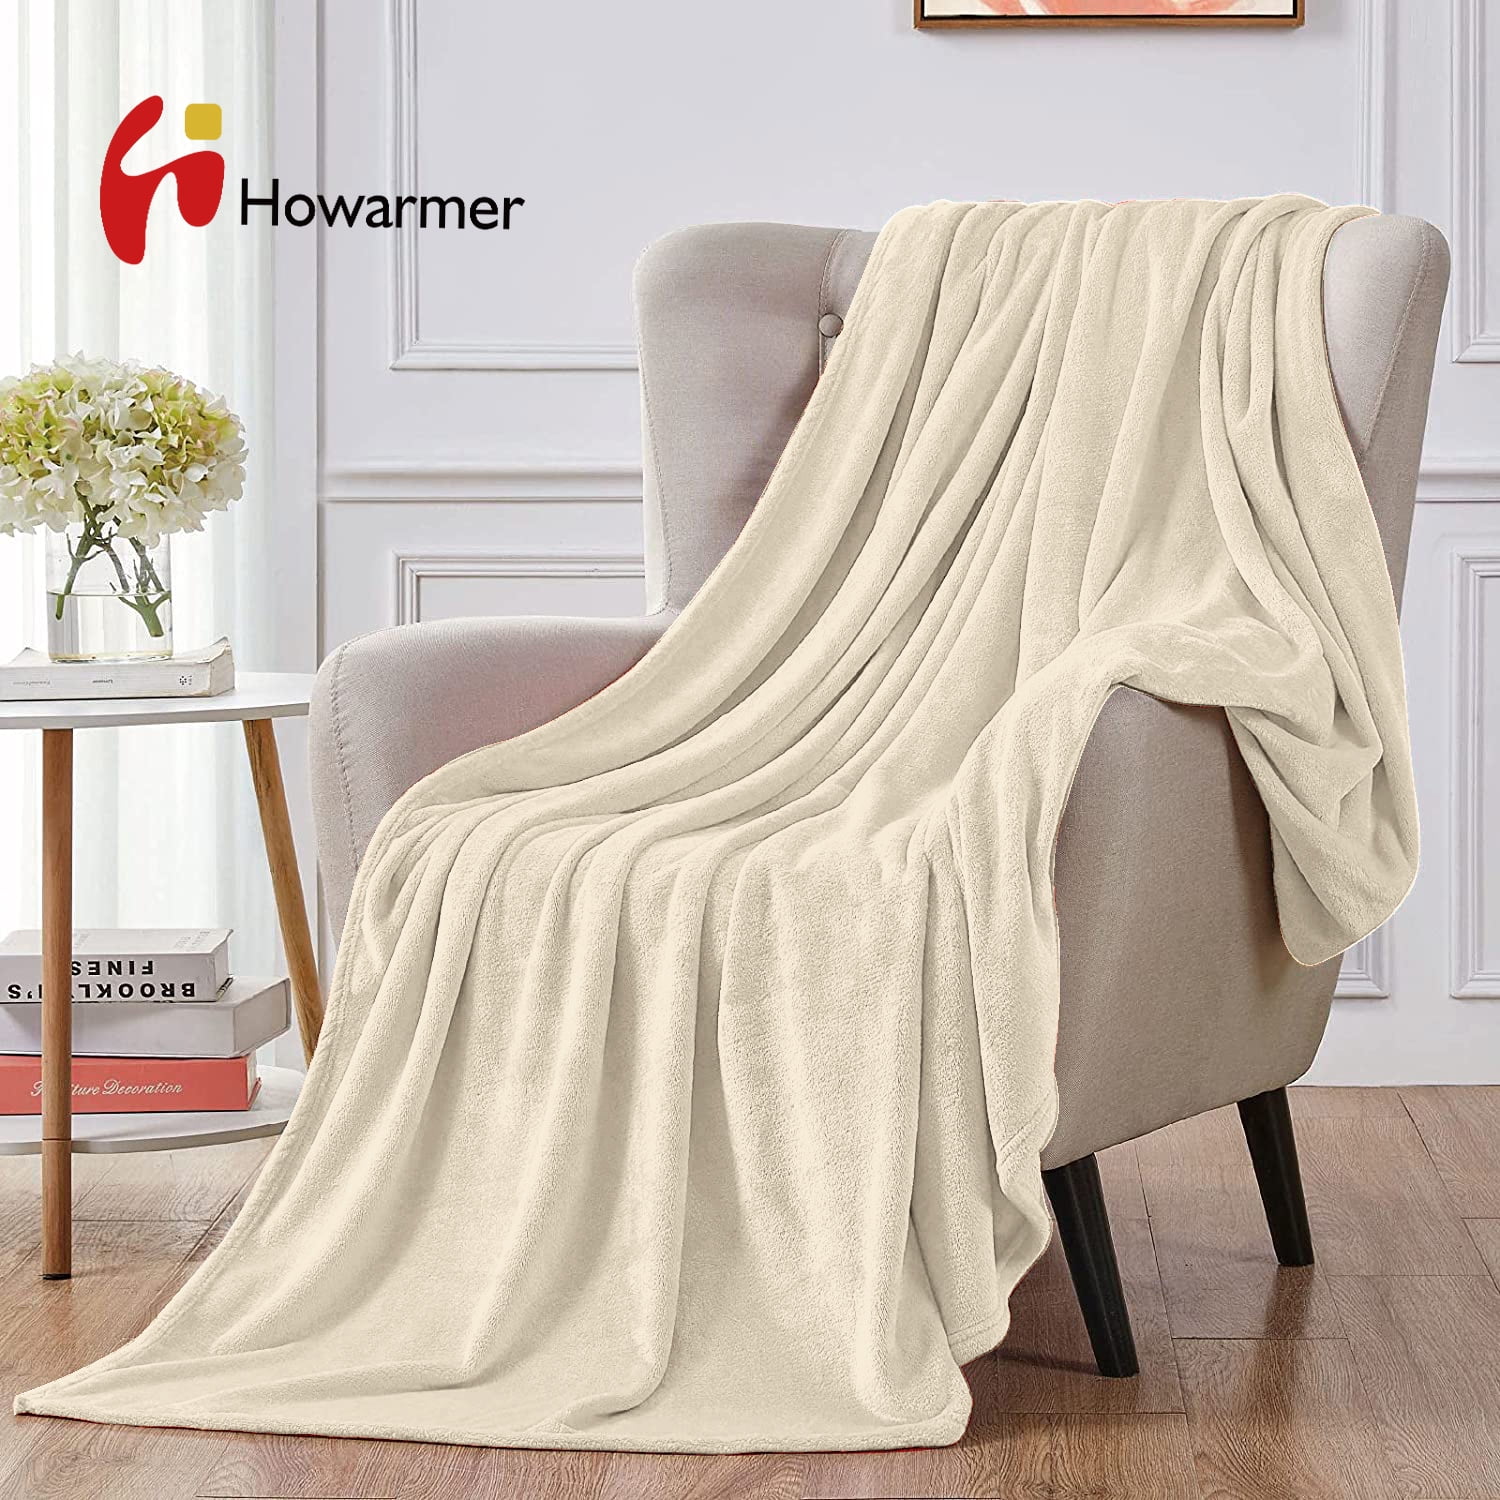 Cuddly blanket Living area blanket Fluffy Flannel Fleece Blanket Sofa Blanket Bed Throw DE 